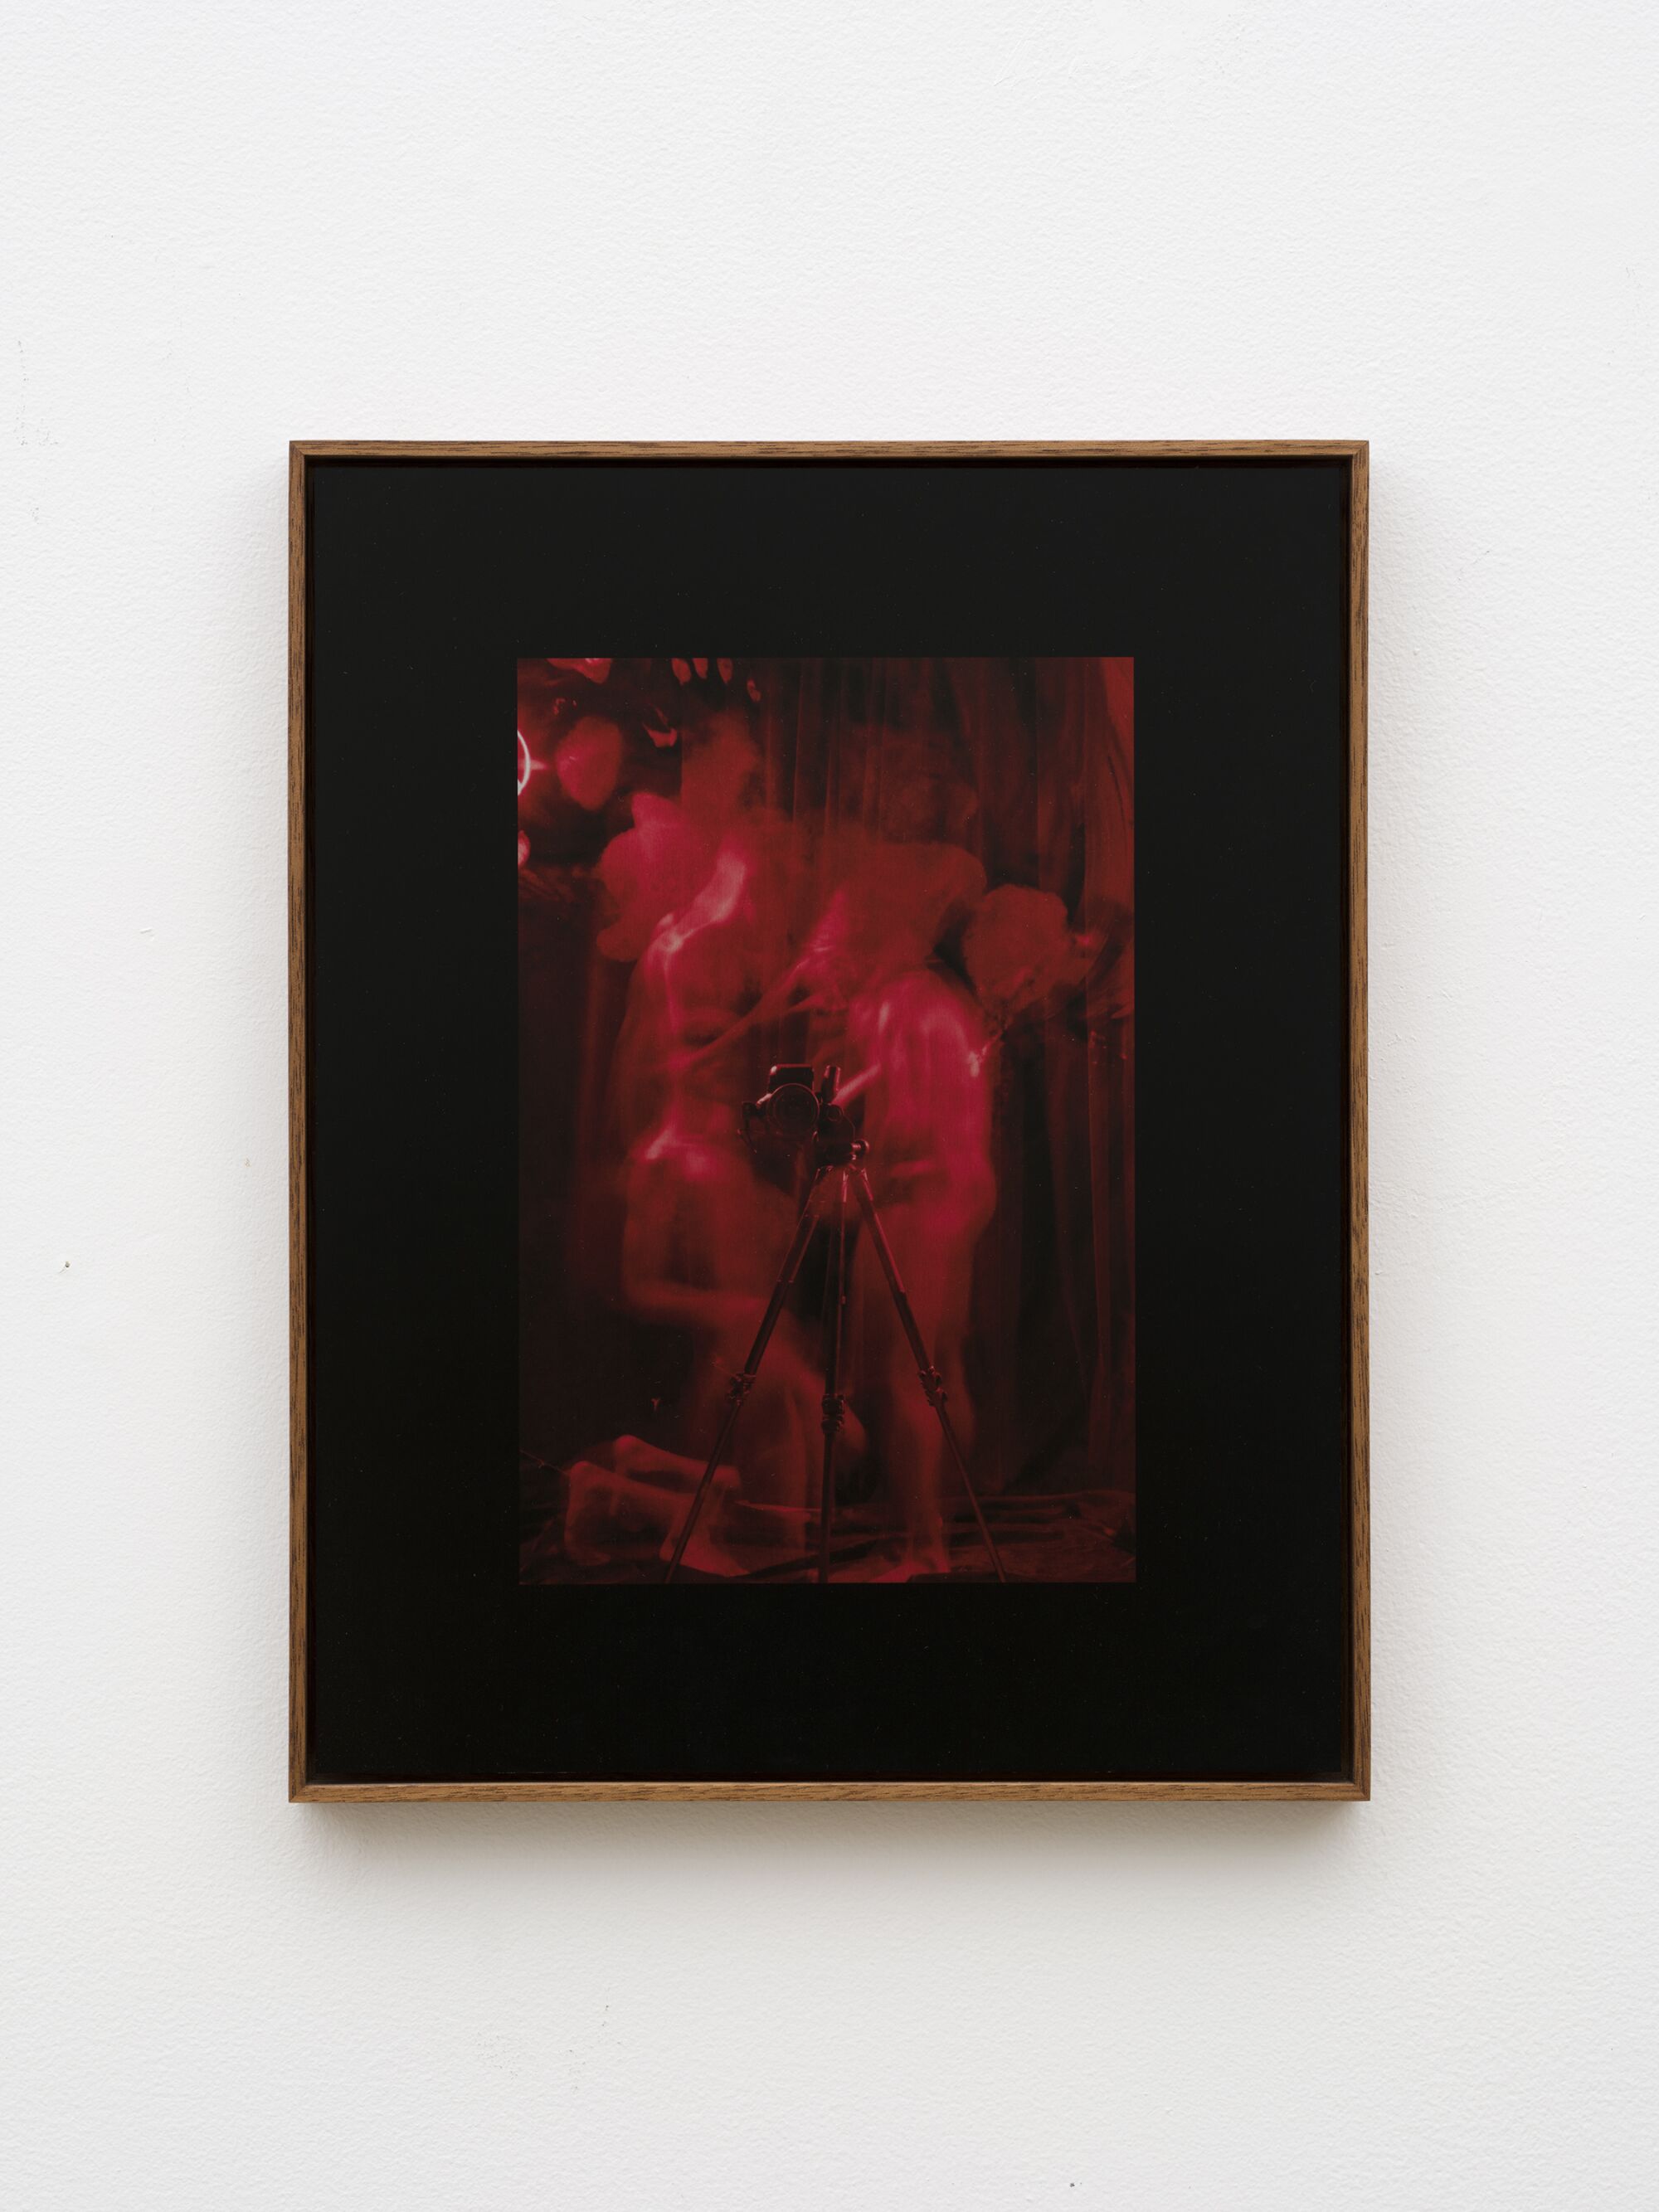 Dark Room Studio "red light" series by Paul Sepuya. Dark Room Studio Mirror (0X5A5668), 2021, dye sublimation print, 11 x 14